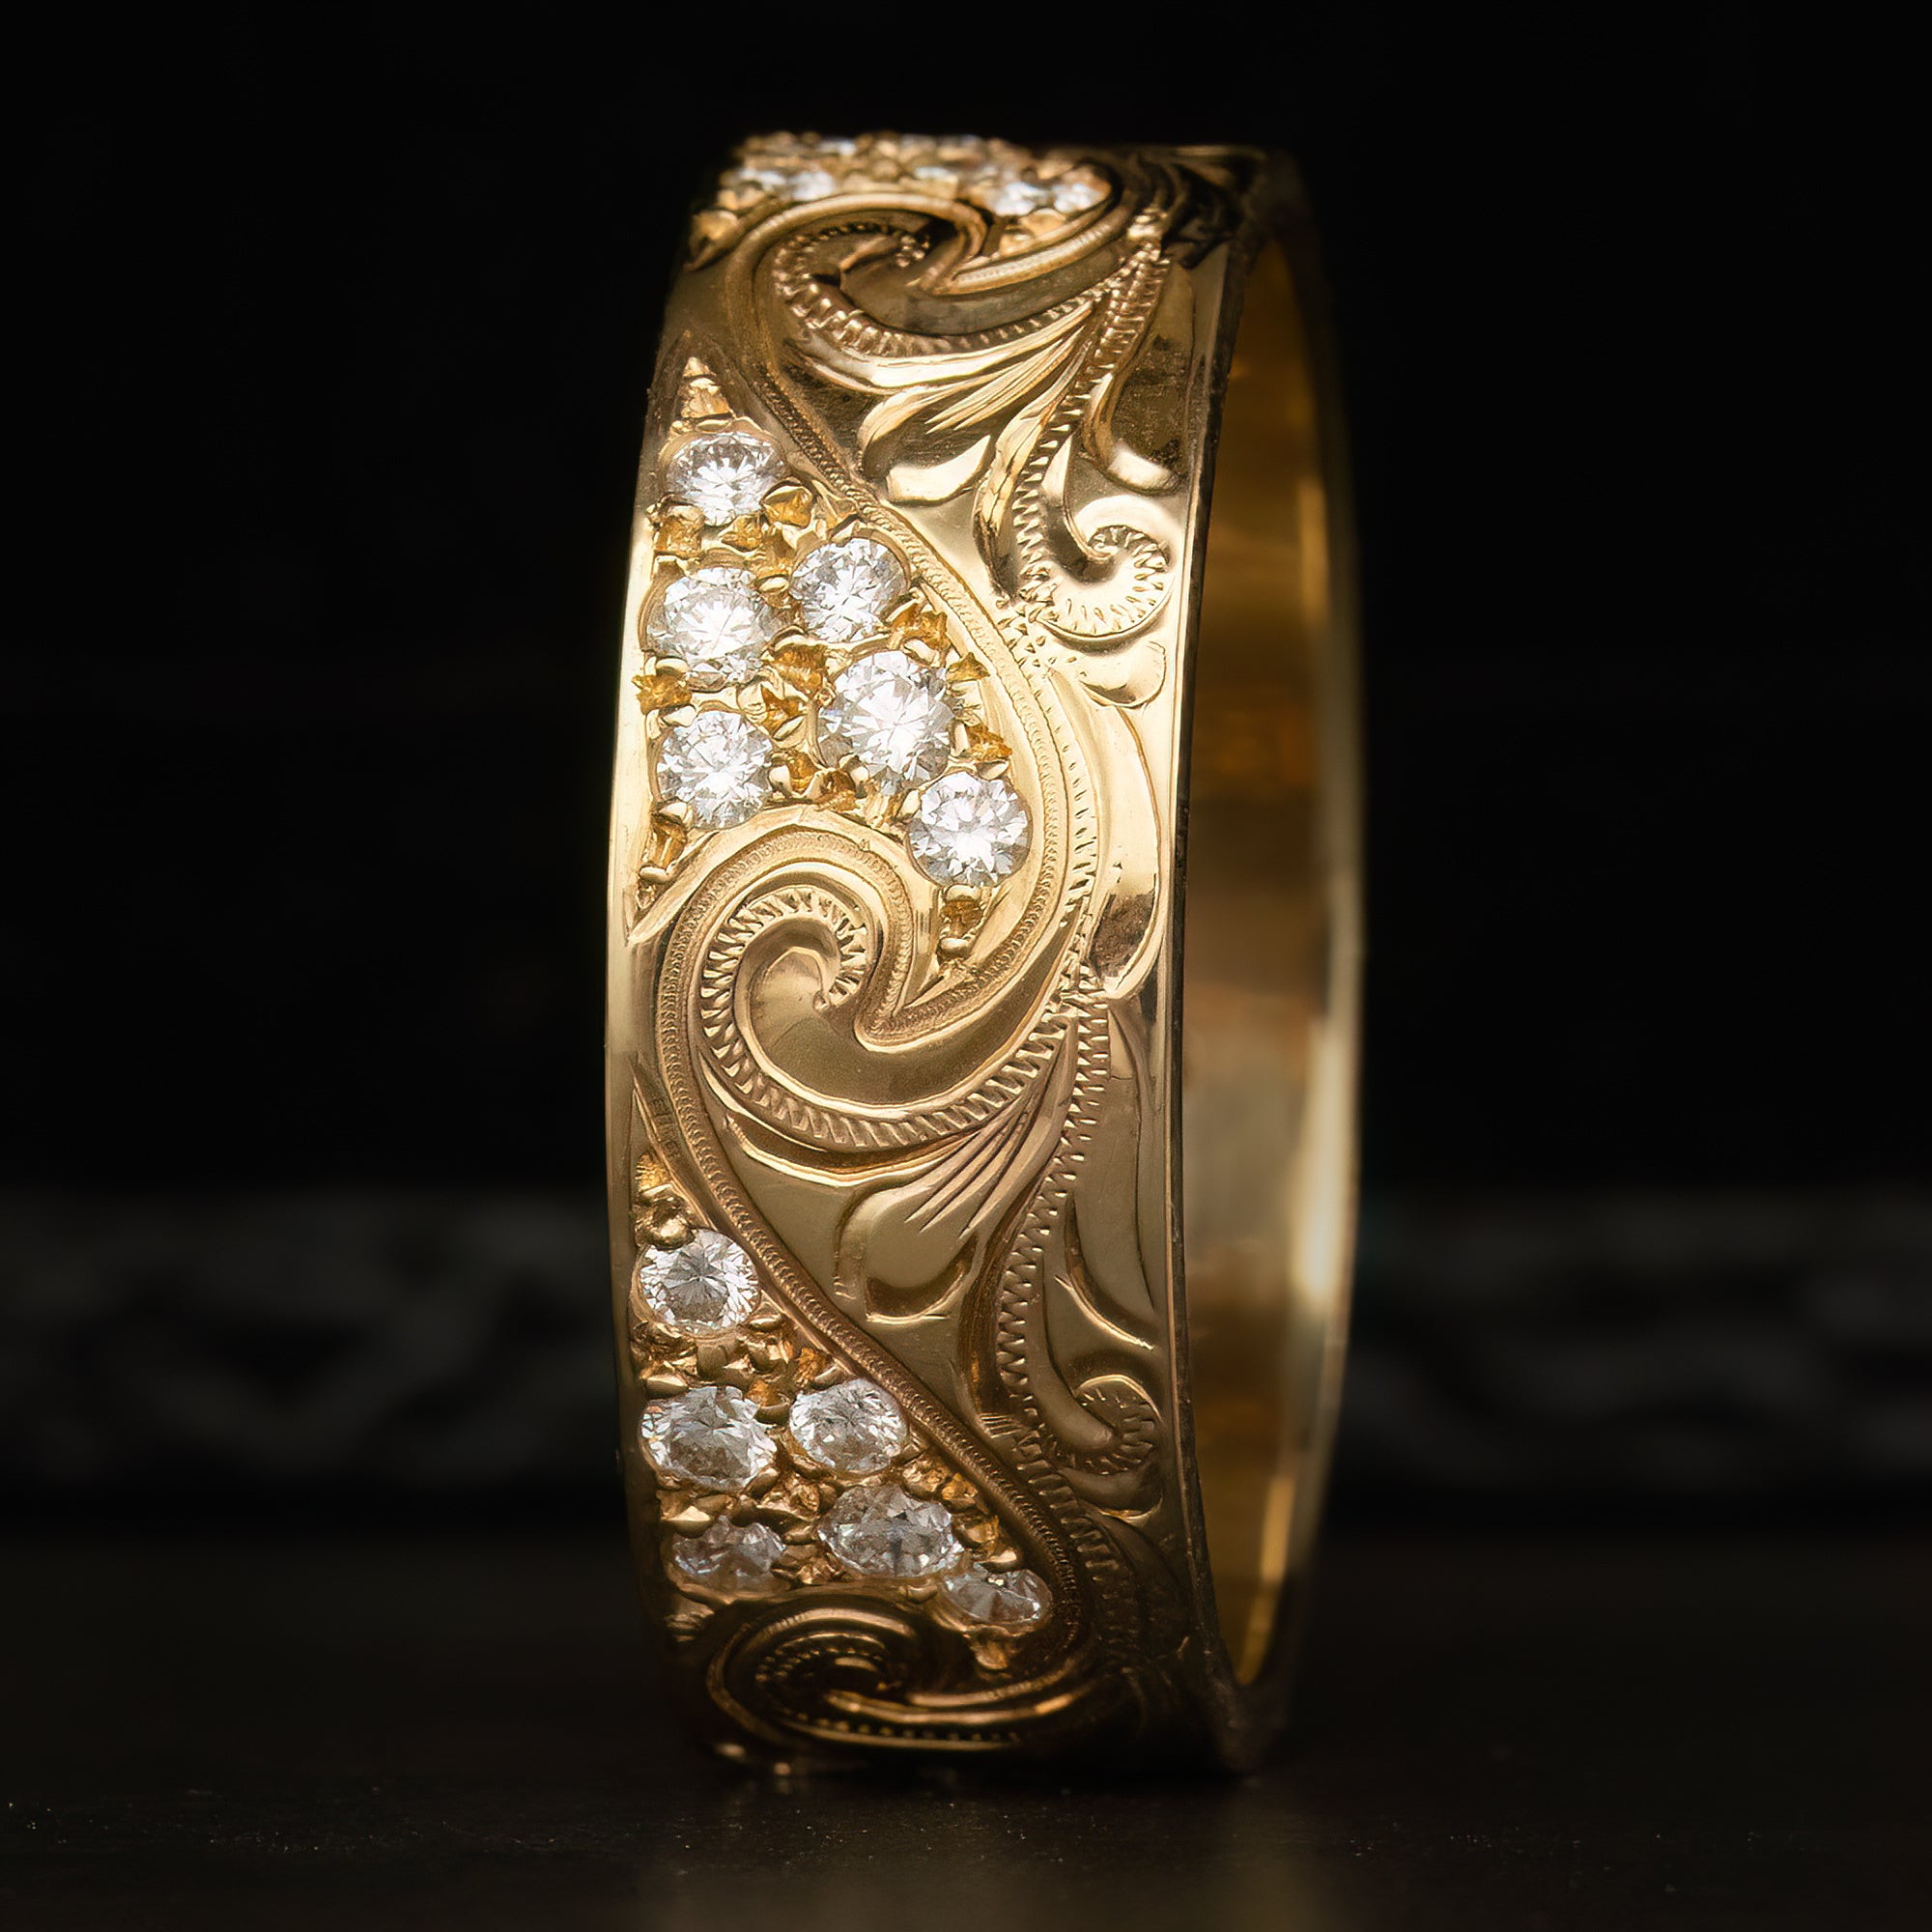 Engraved Diamond Ring - Wavy Wedding Band